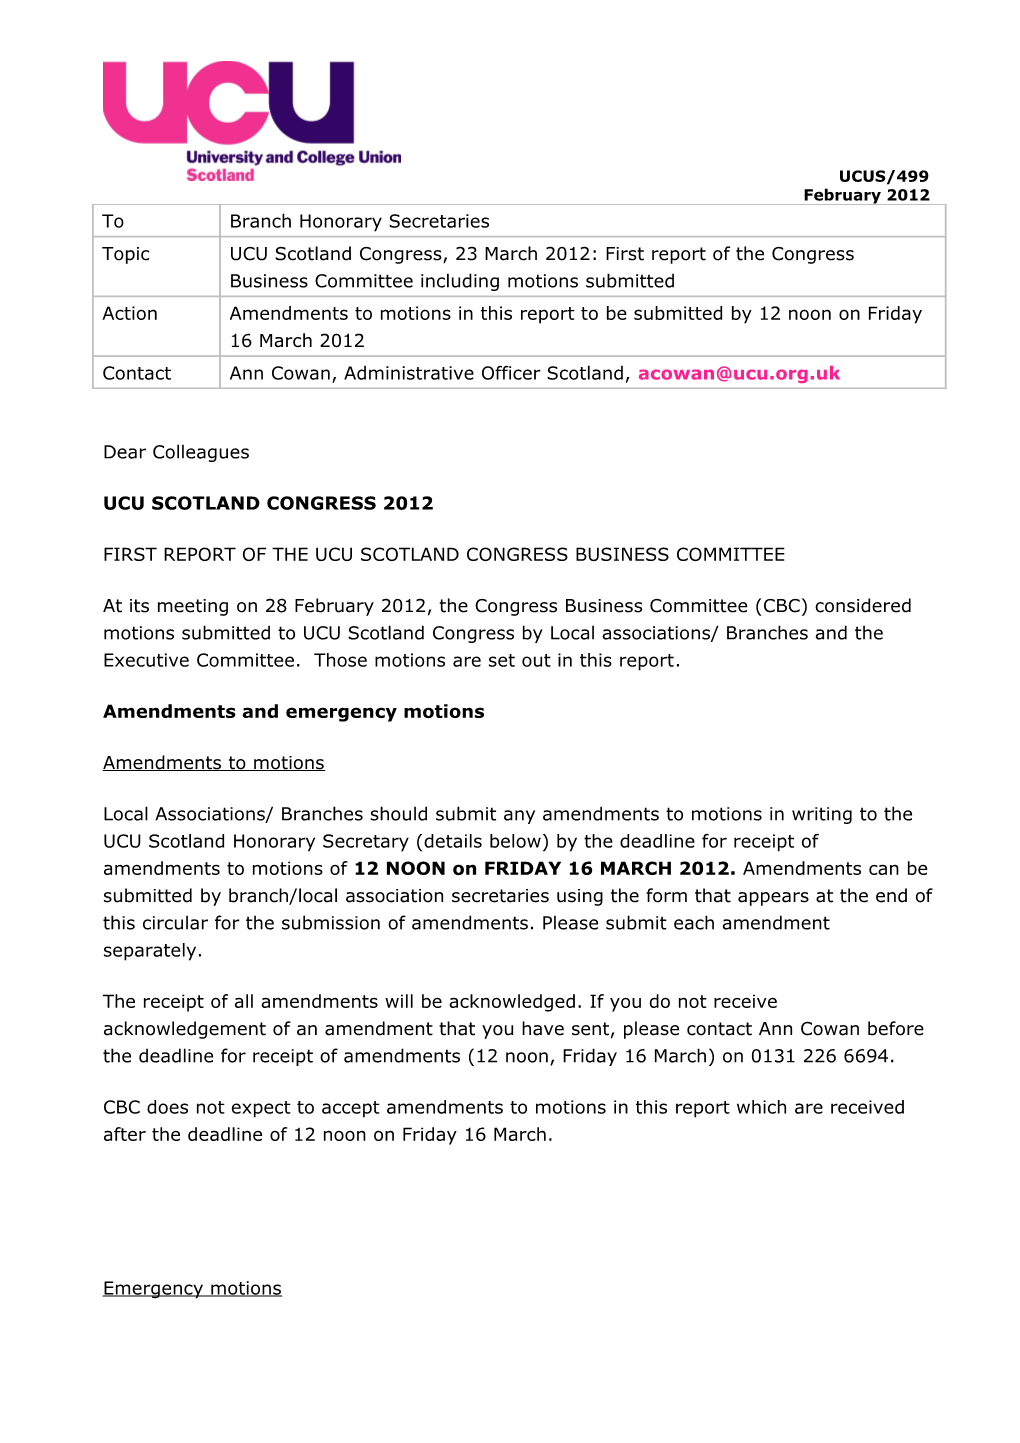 First Report of the Ucu Scotlandcongress Business Committee